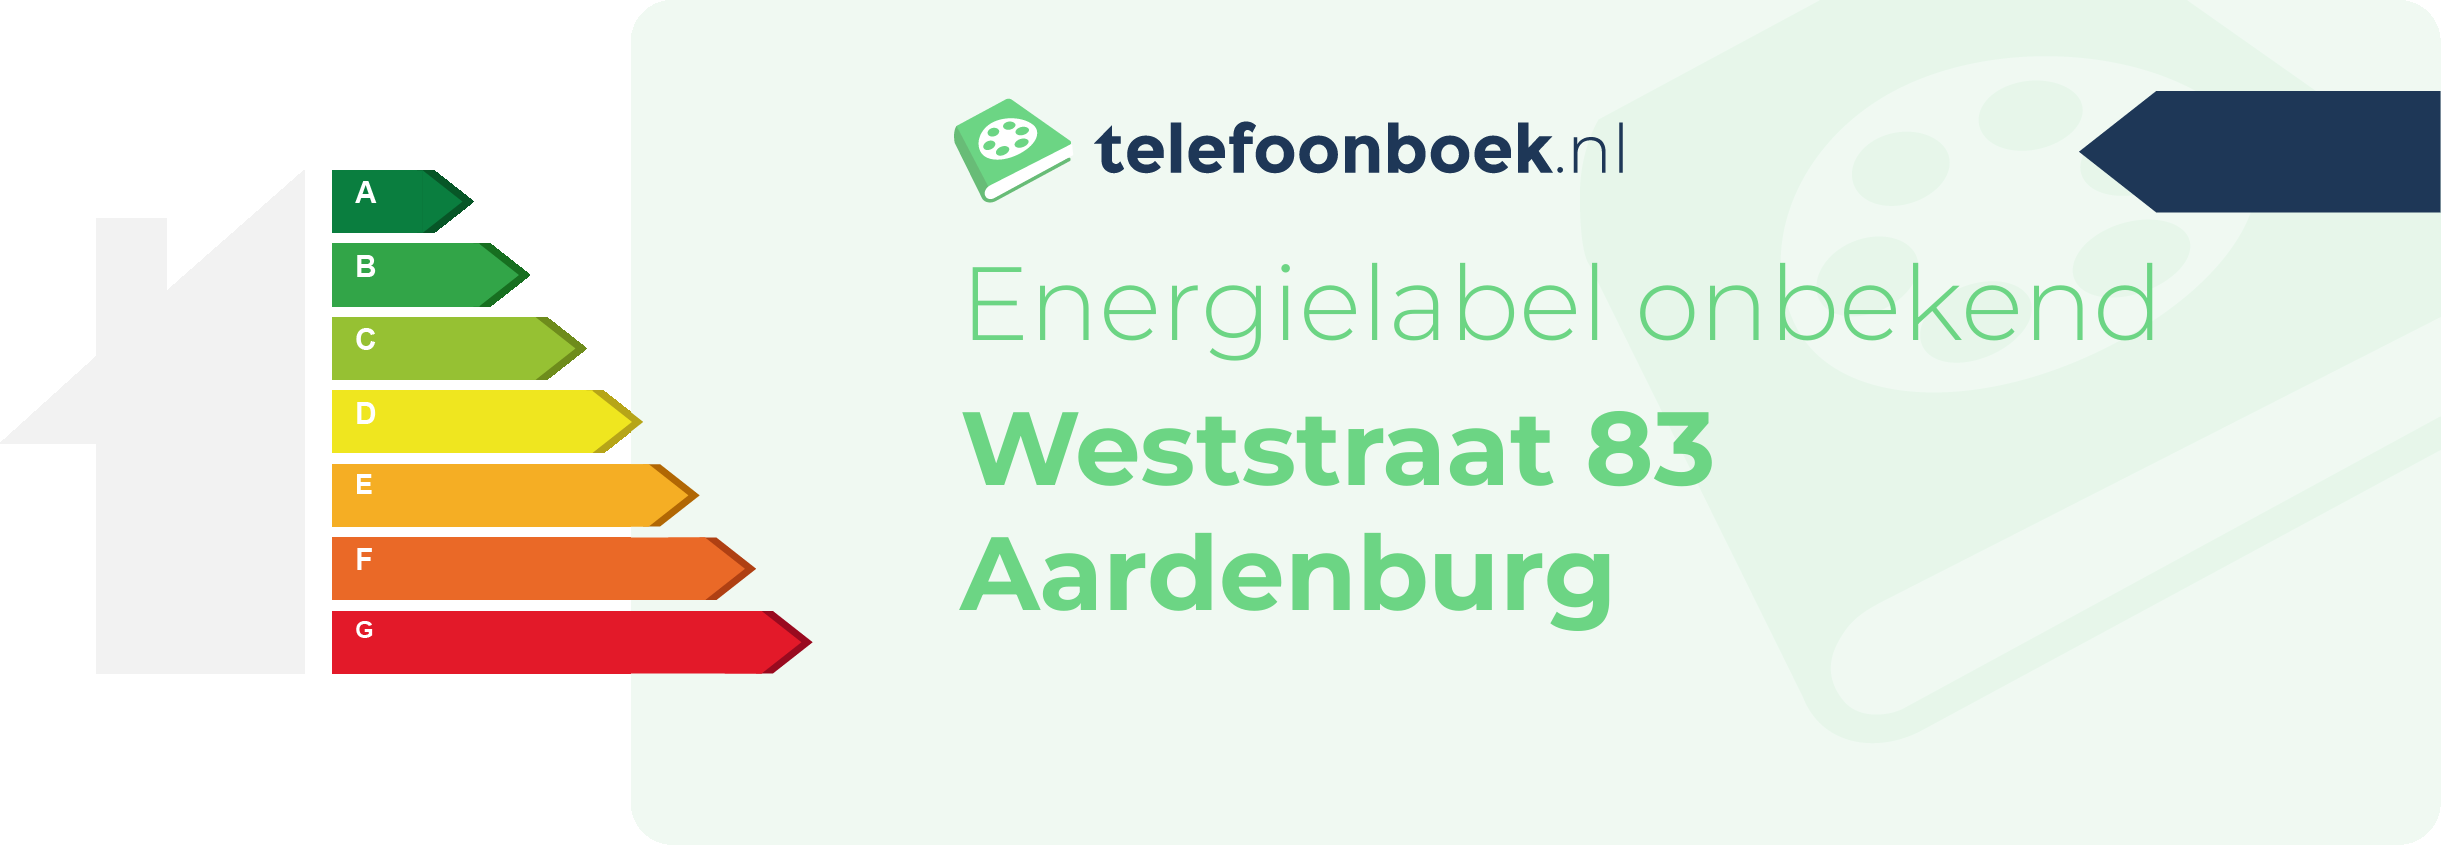 Energielabel Weststraat 83 Aardenburg